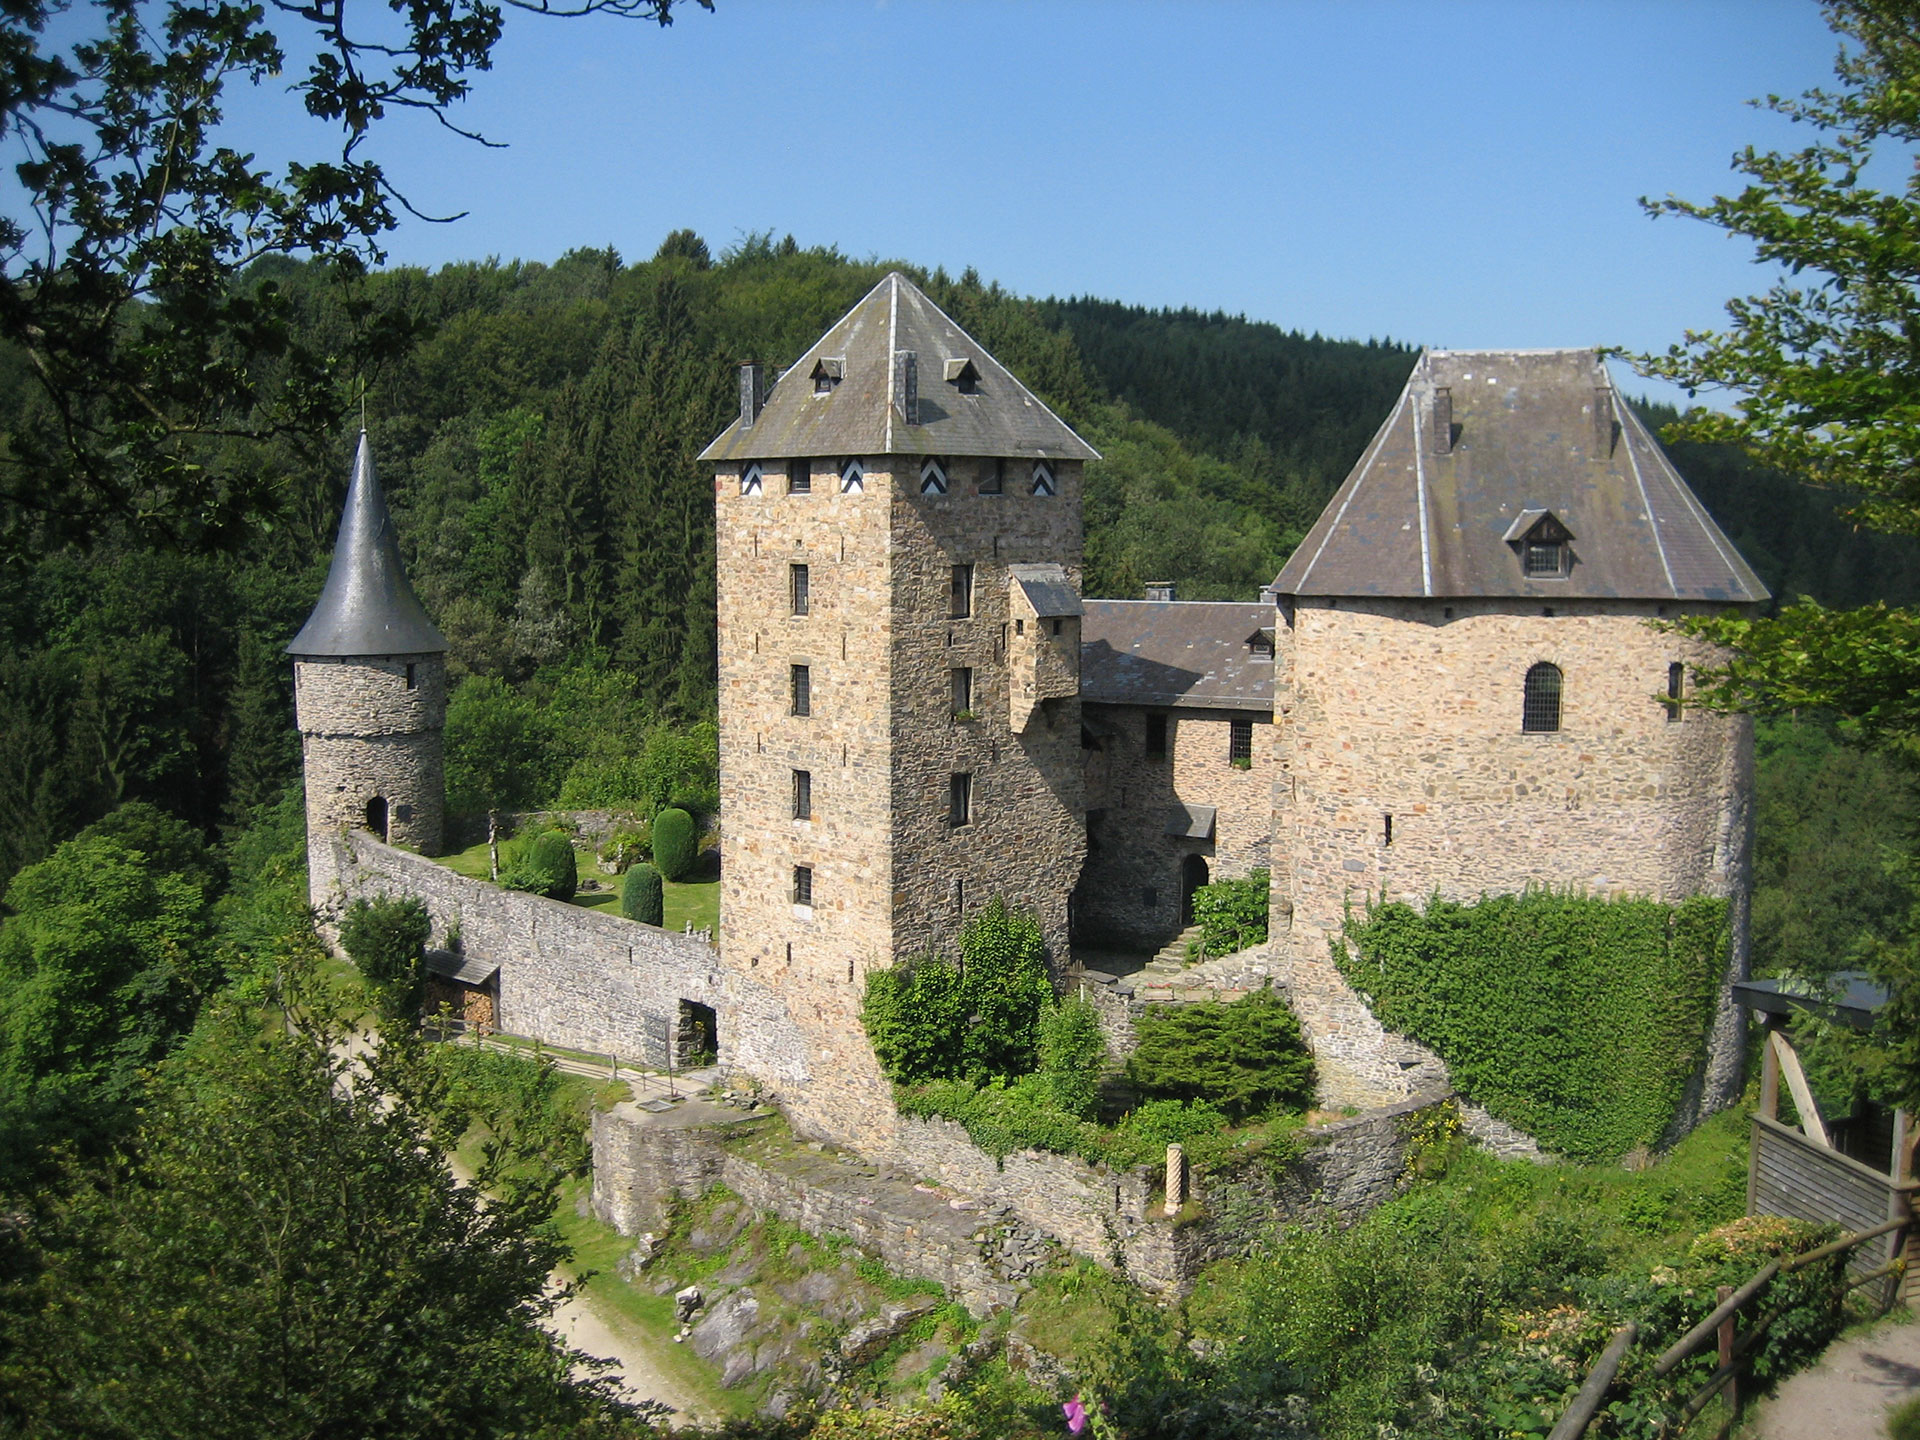 Château - Reinhardstein - Canton de l'Est - Wallonie insolite